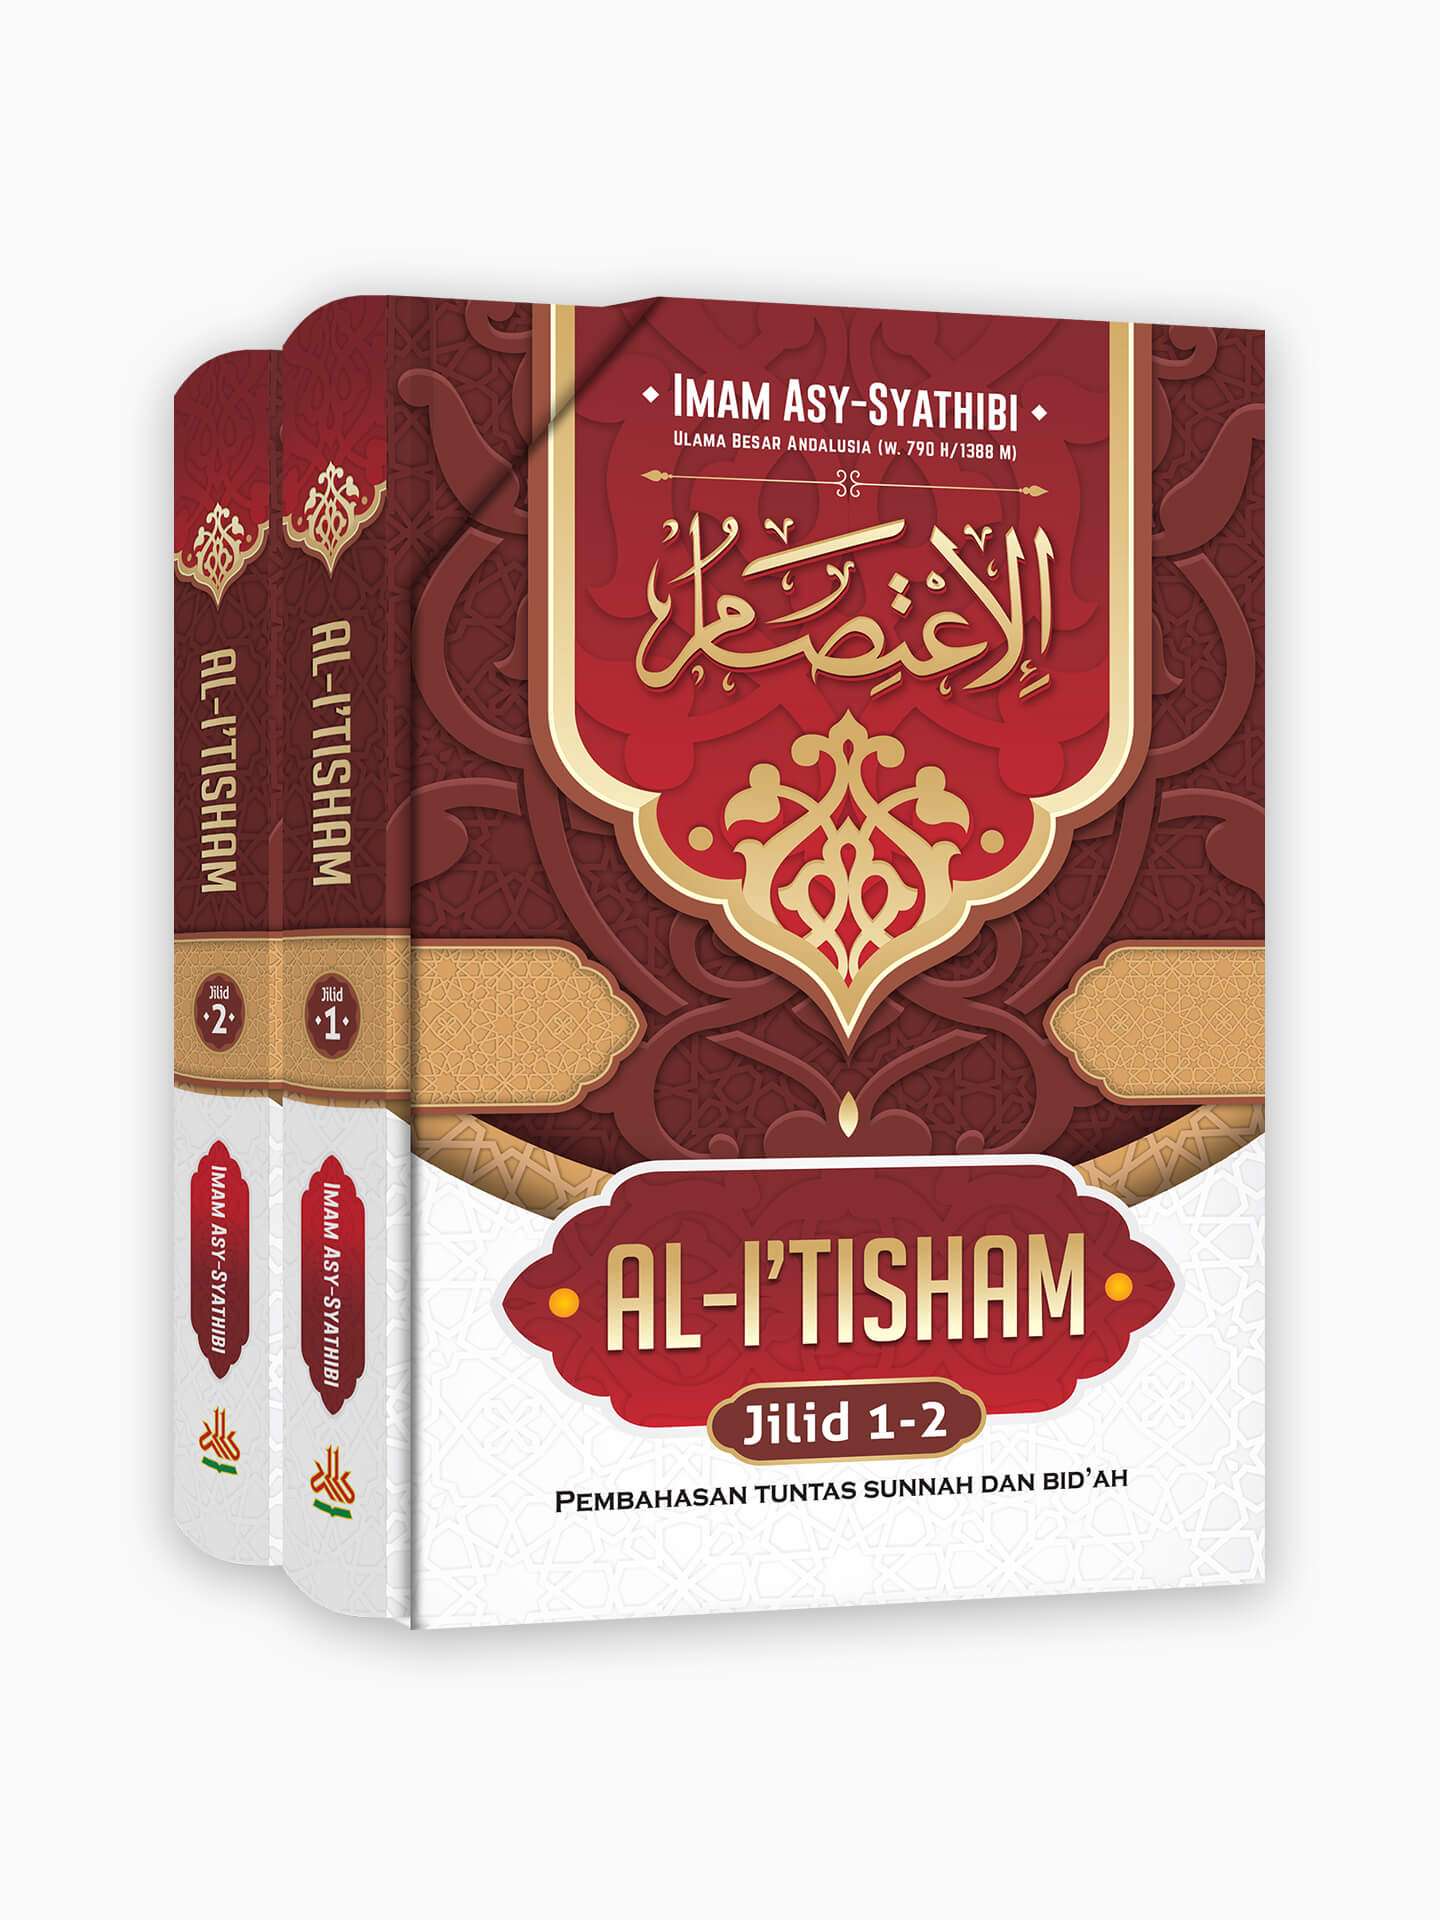 Al-I'tisham : Pembahasan Tuntas Sunnah dan Bid'ah